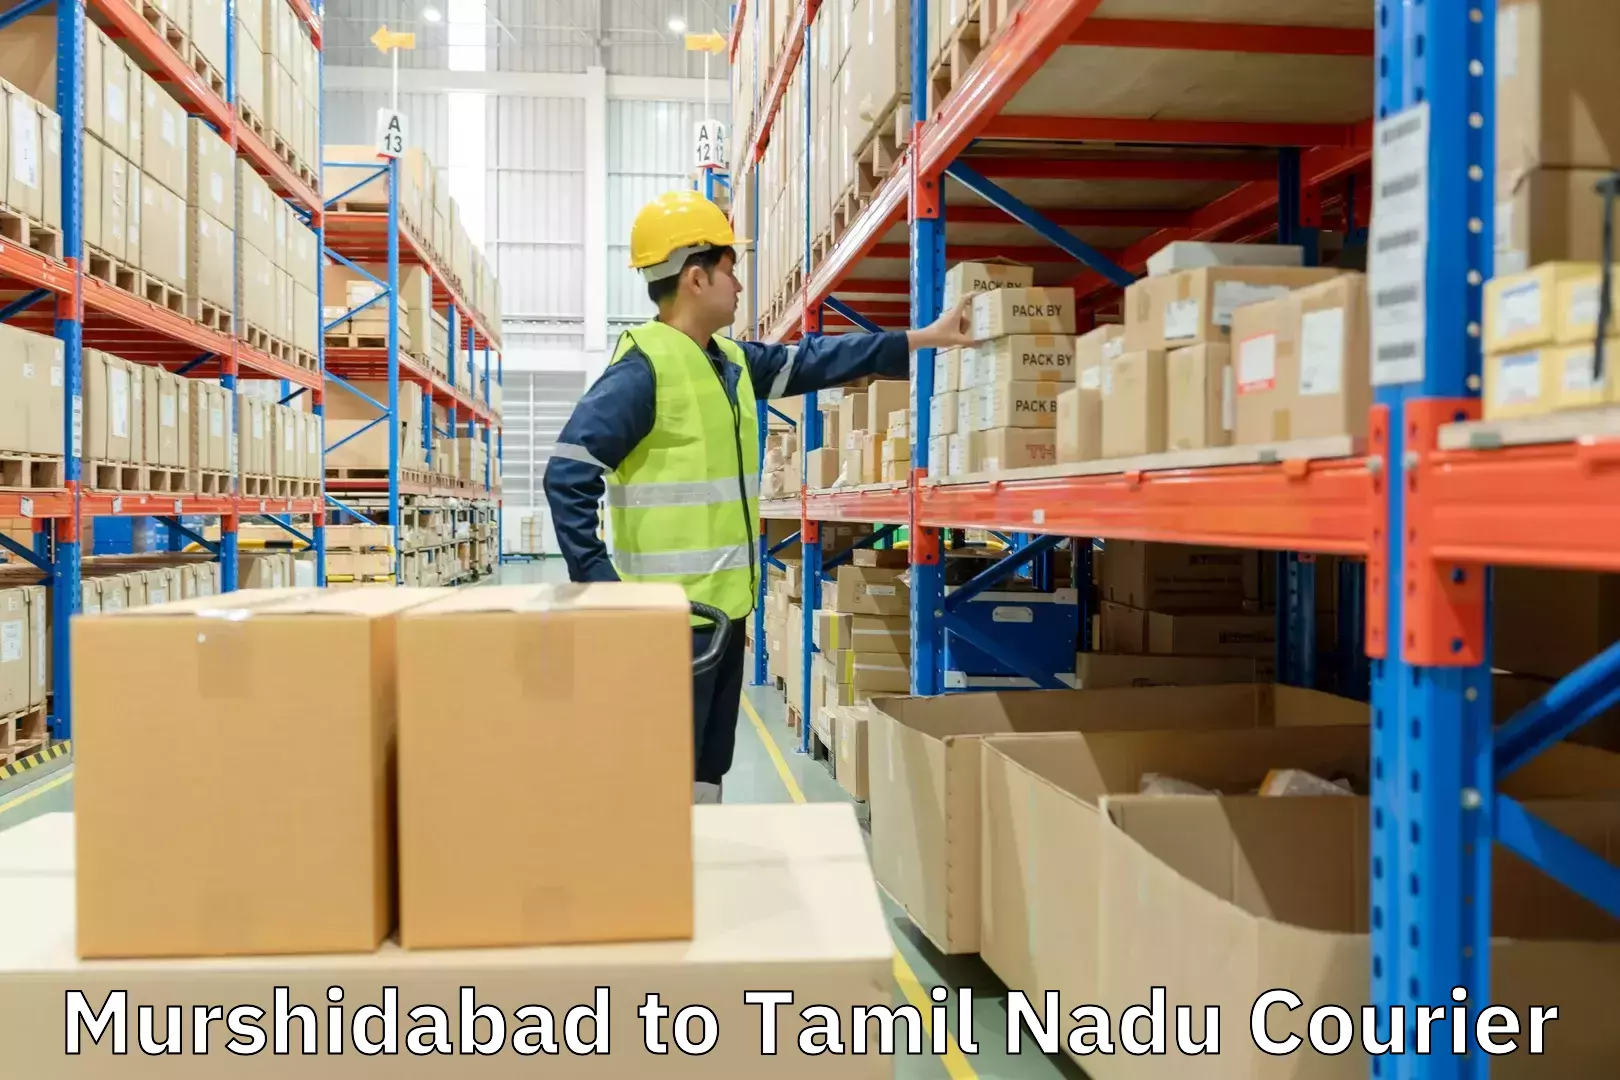 Nationwide delivery network Murshidabad to Chennai Port